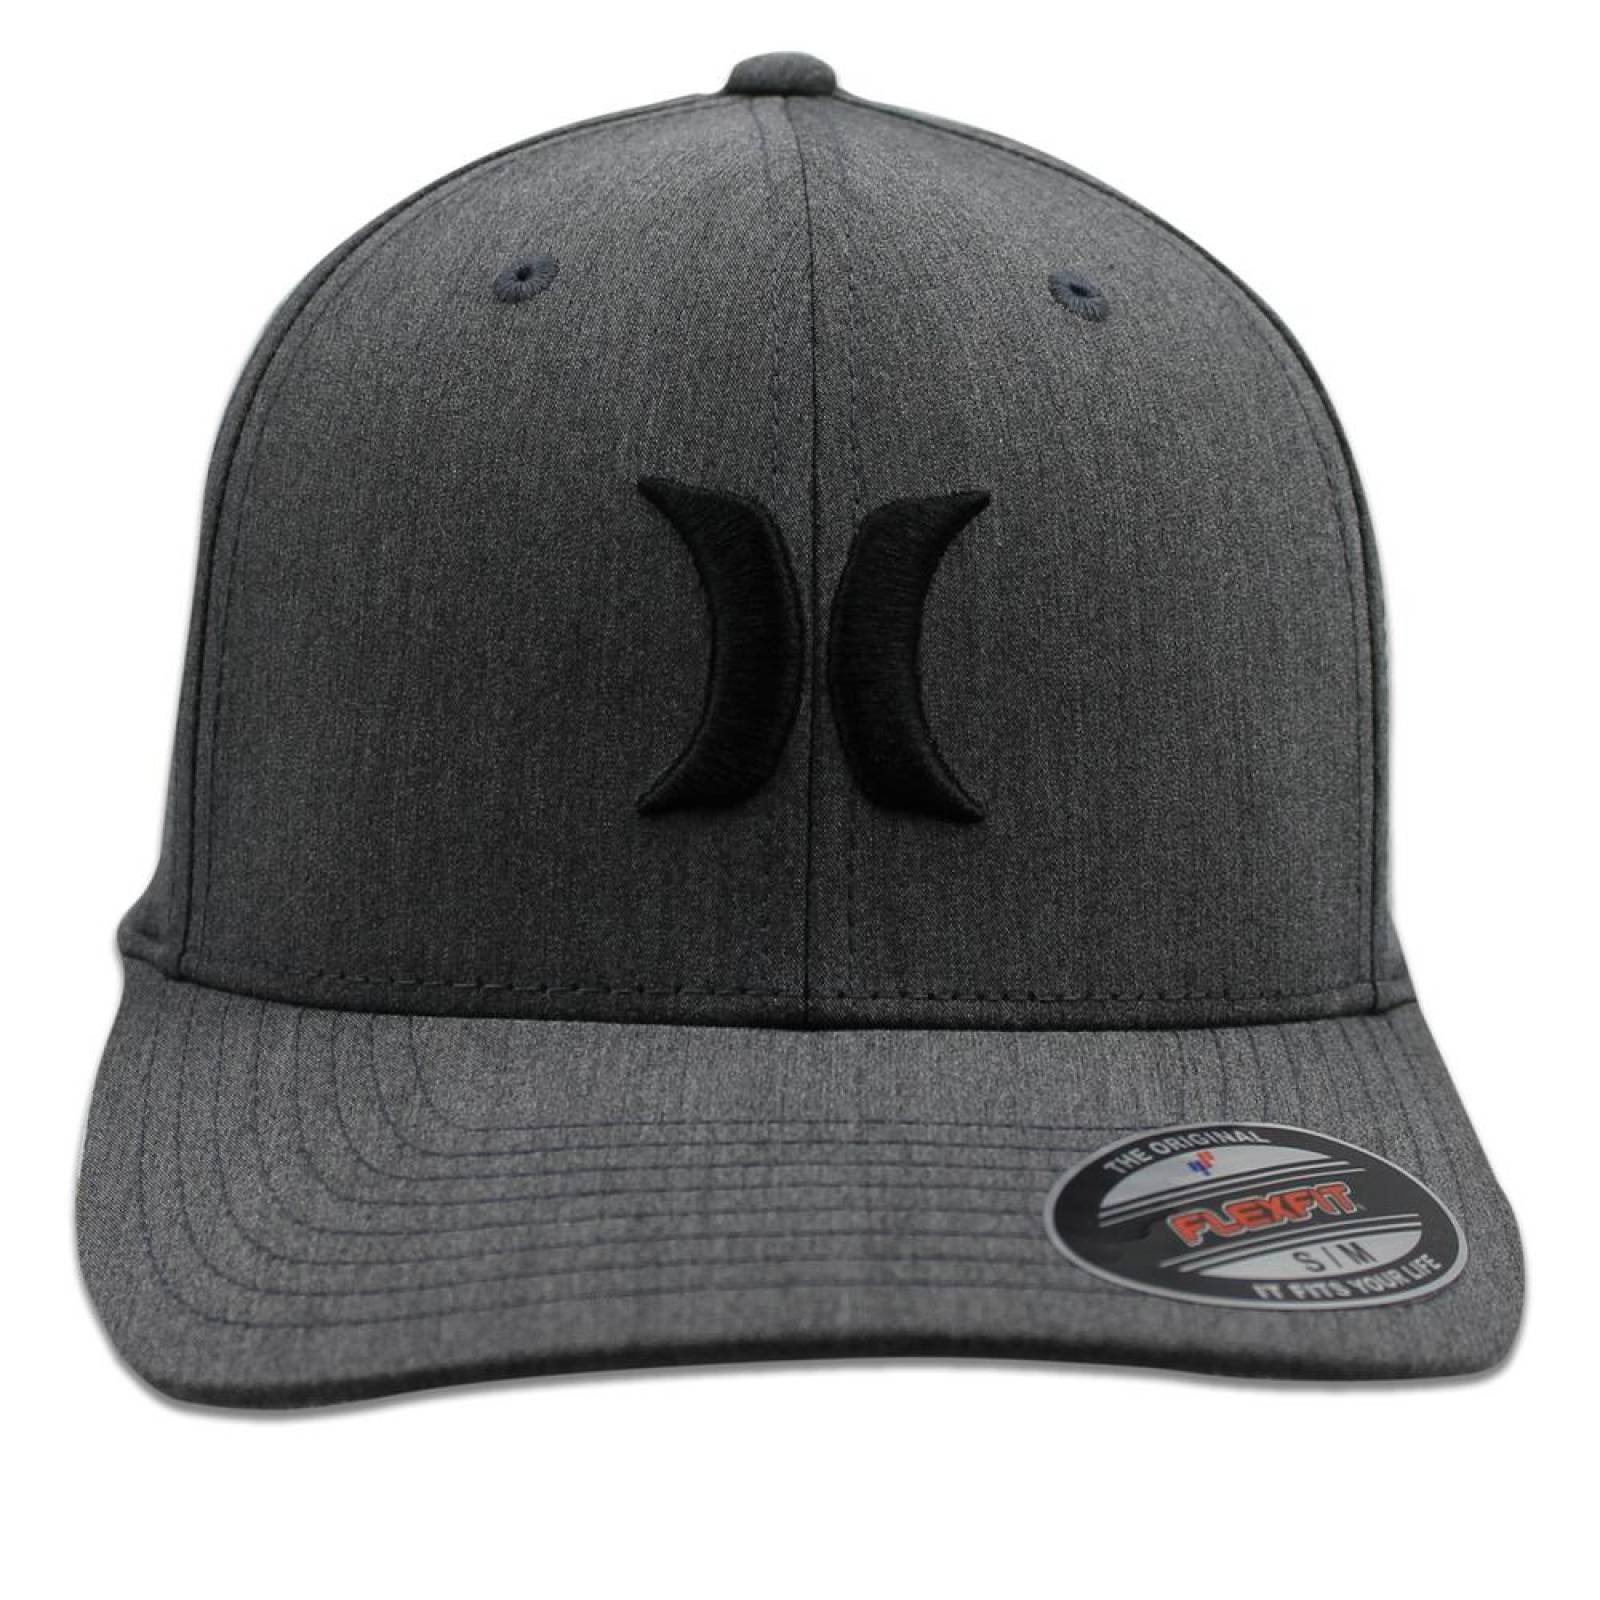 Gorra Hurley Flex Fit Textures Hat Gris-S/M 